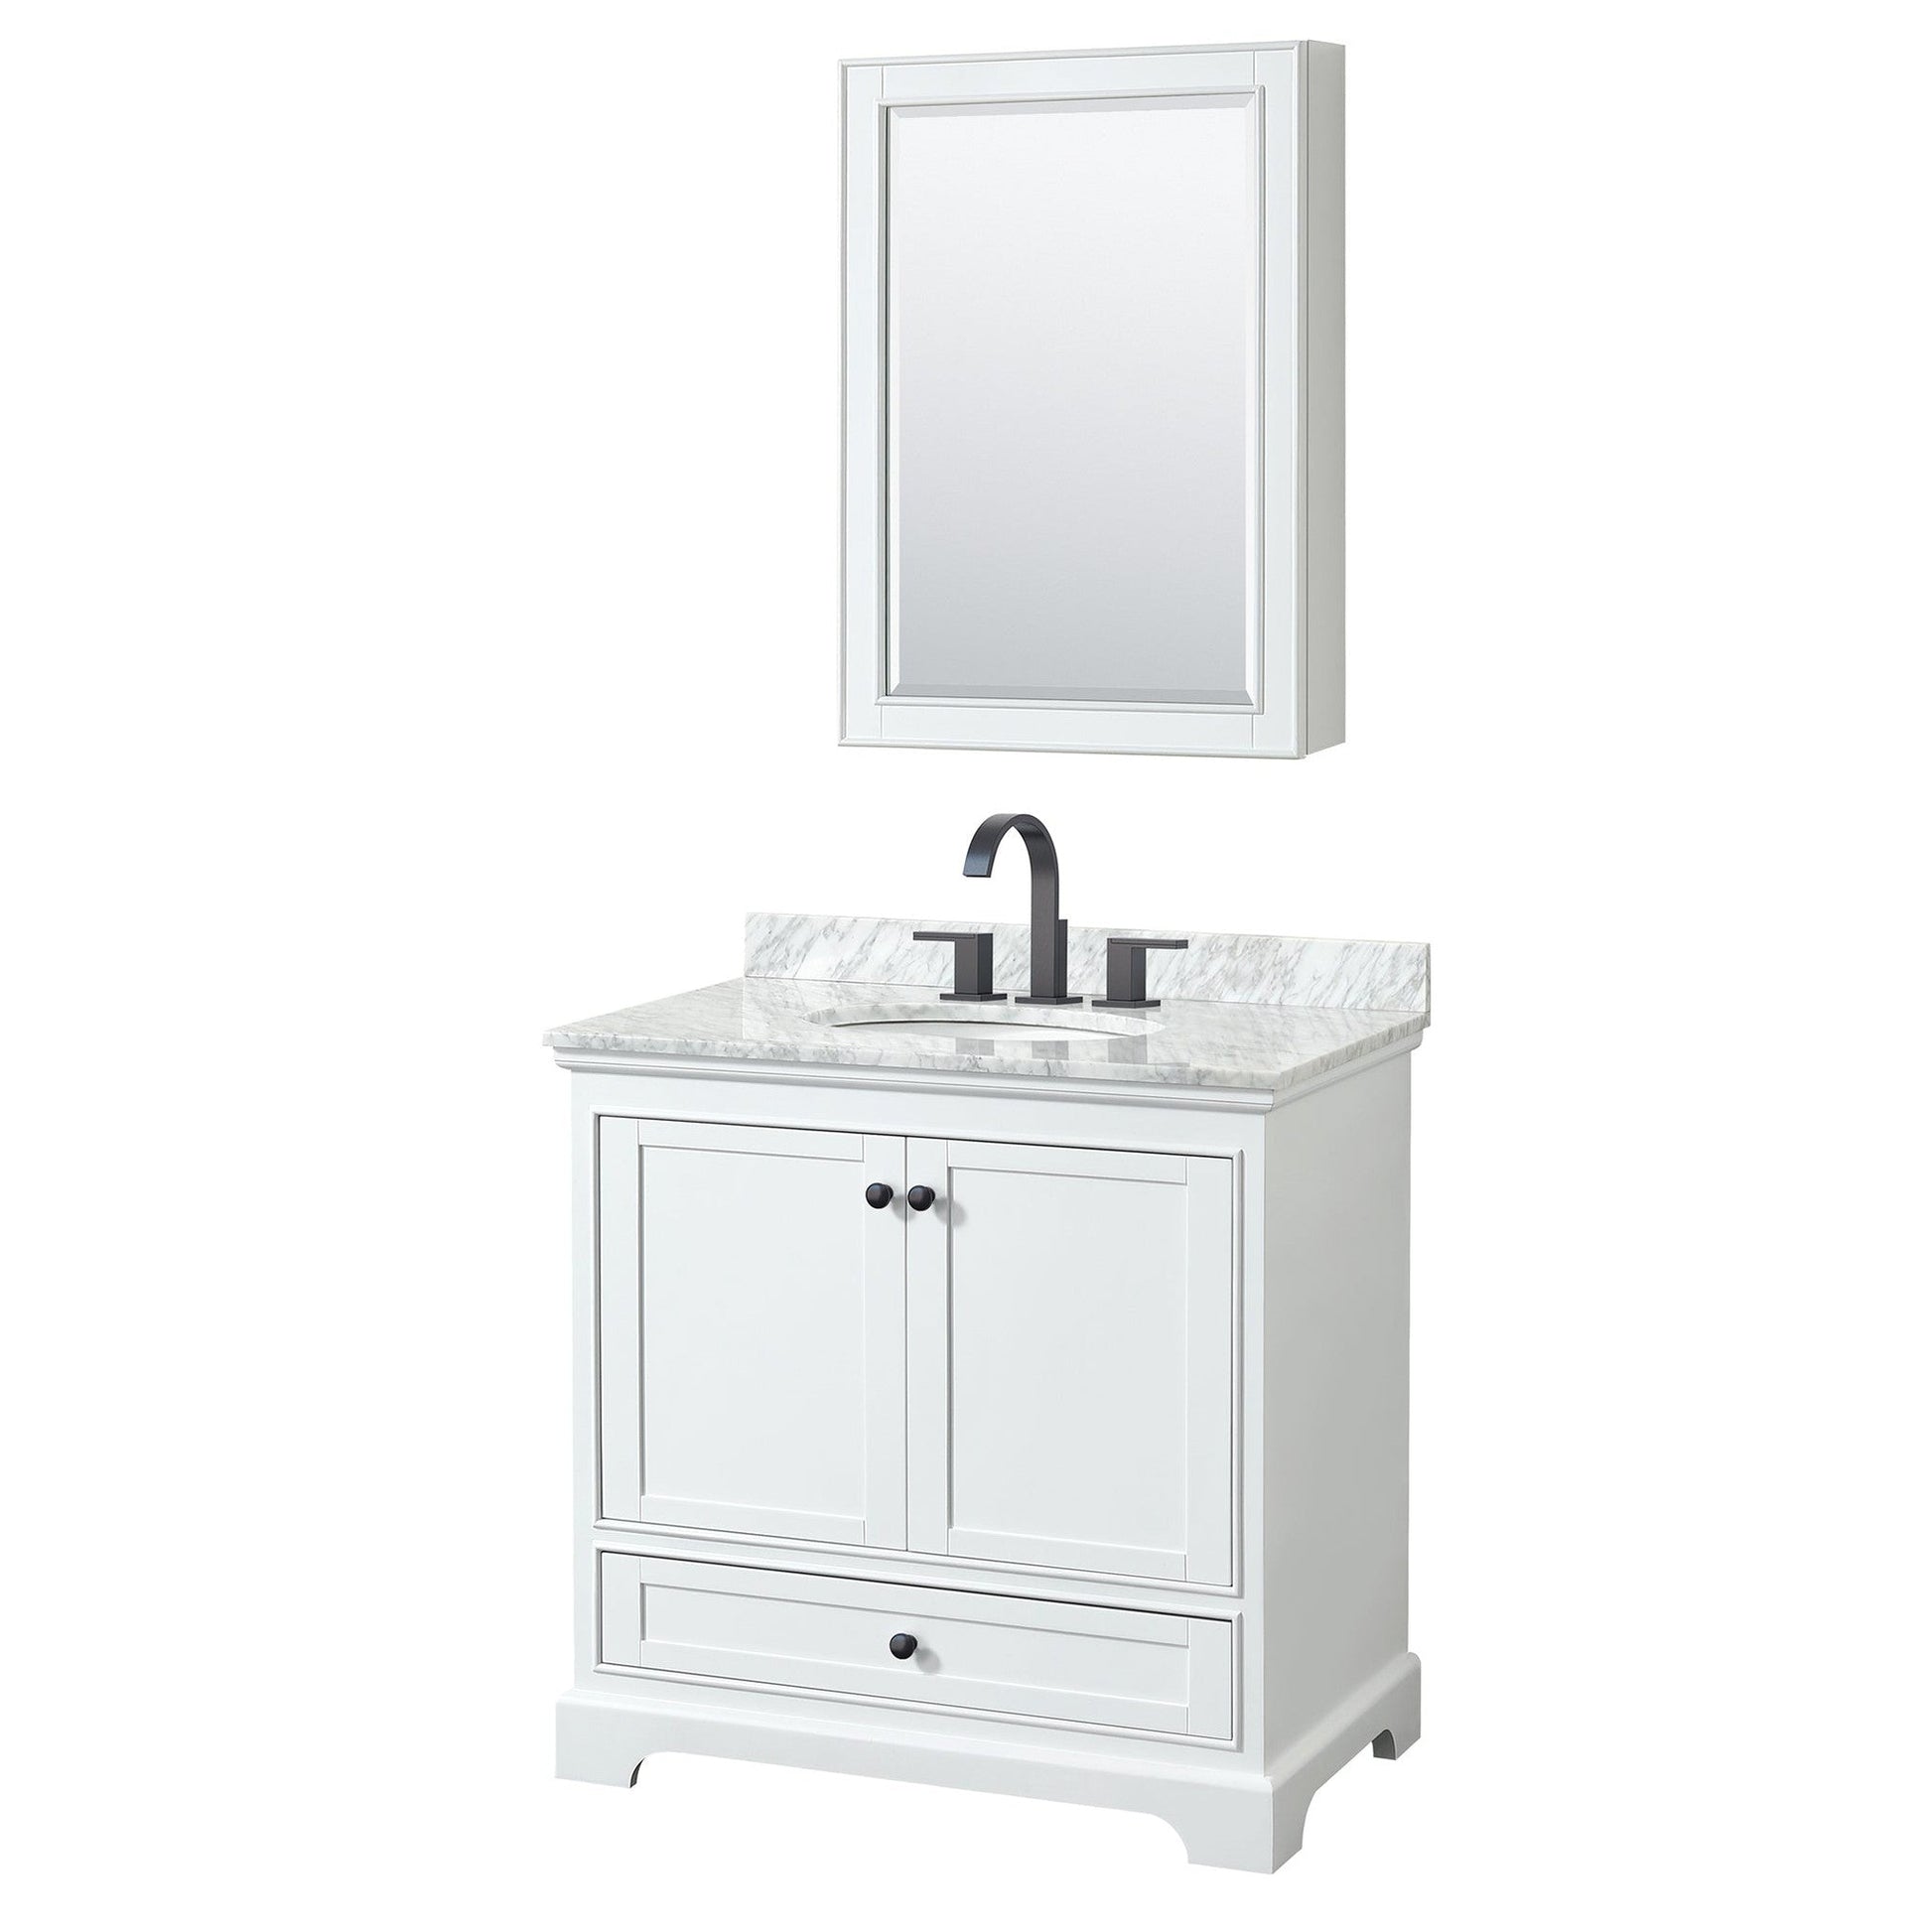 Deborah 36" Single Bathroom Vanity in White, White Carrara Marble Countertop, Undermount Square Sink, Matte Black Trim, Medicine Cabinet